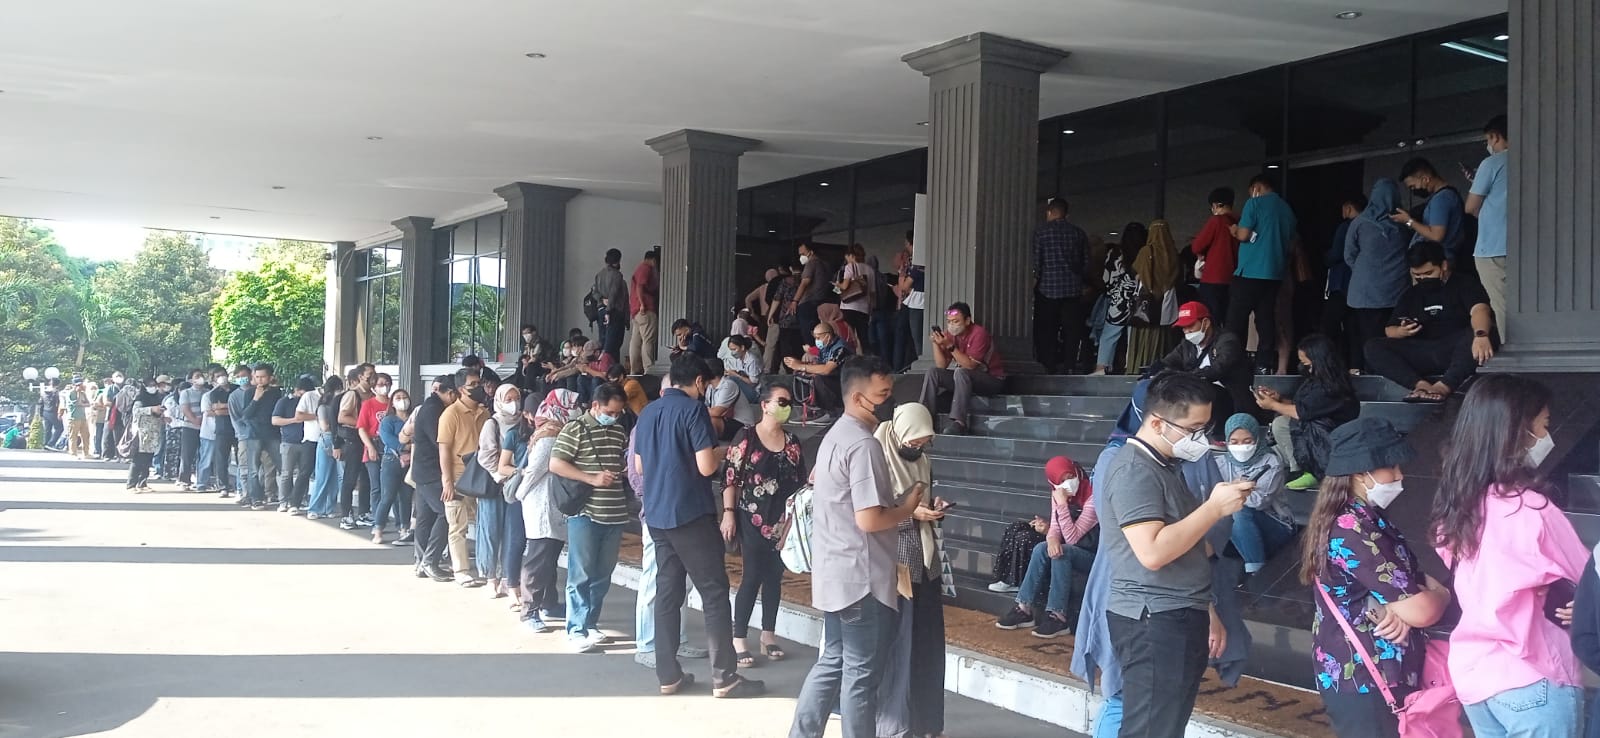 Antusias Masyarakat Rela Antri Berjam-jam Untuk Dapatkan Undangan HUT RI - 77 Di Istana Negara